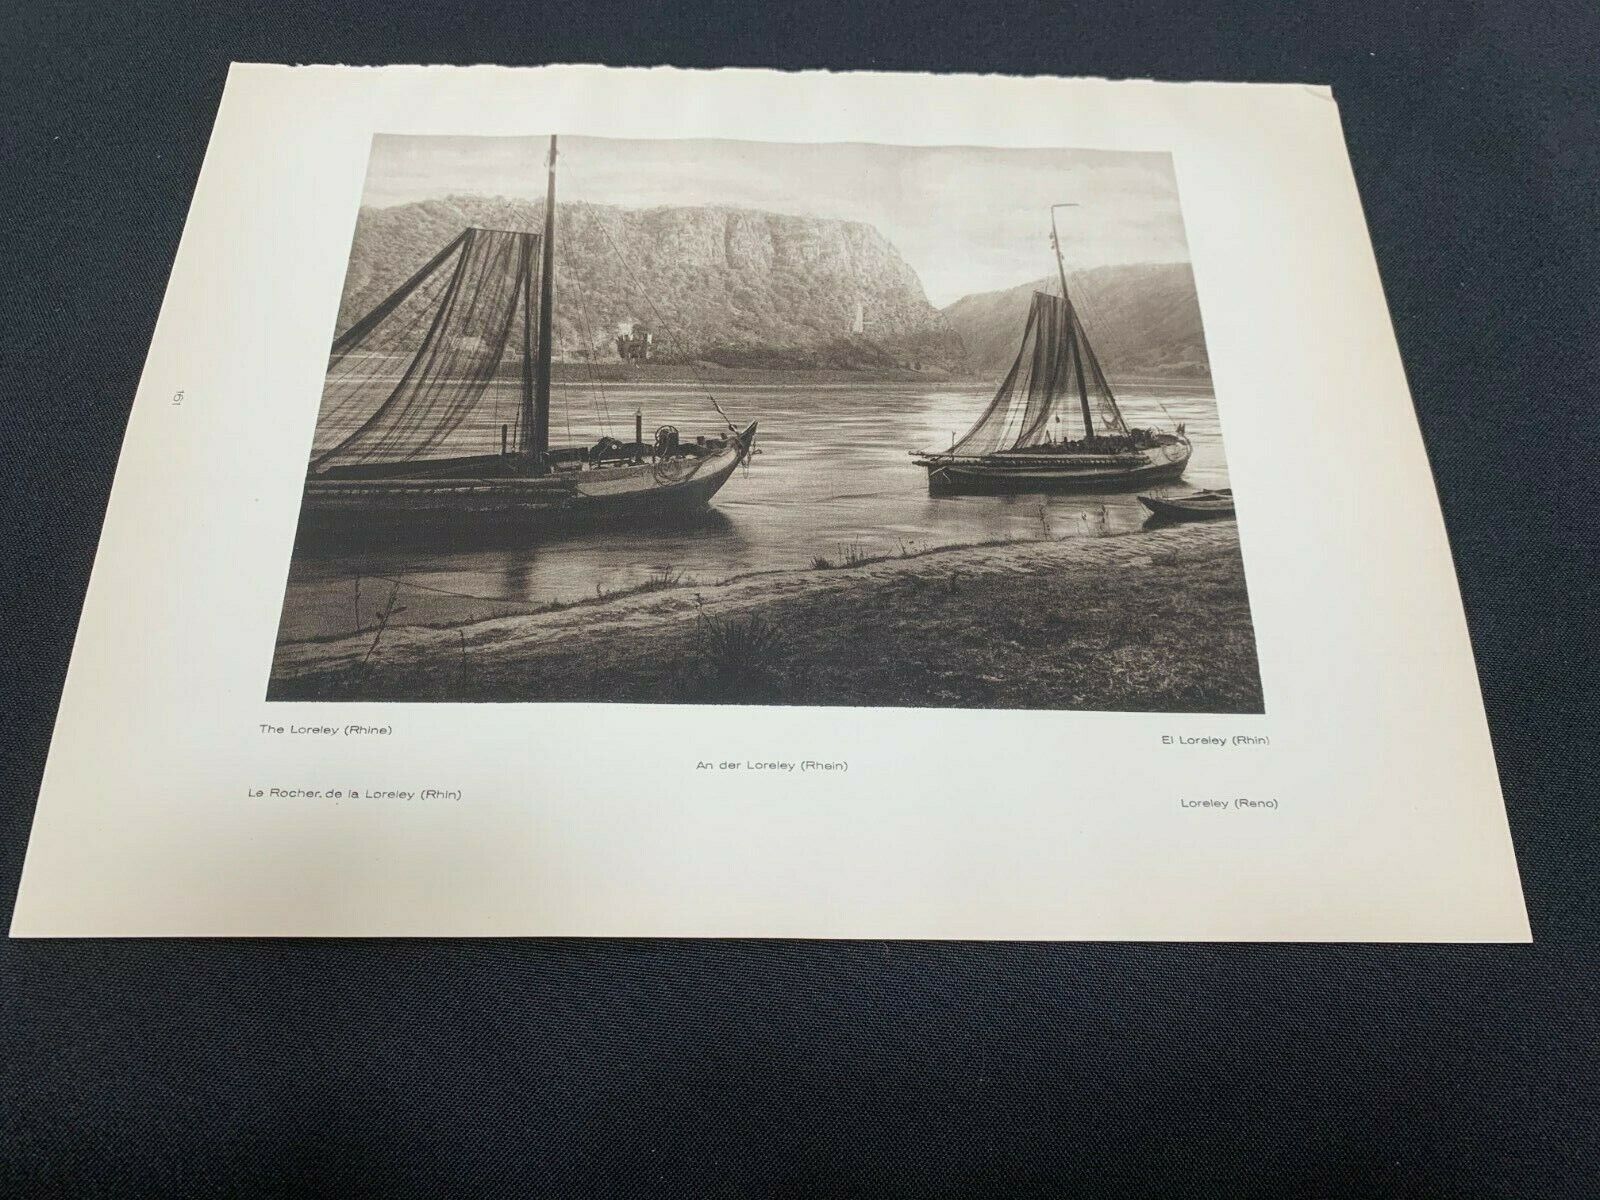 1924 Photogravure The Loreley (Rhine) & Bacharach on the Rhine, Germany